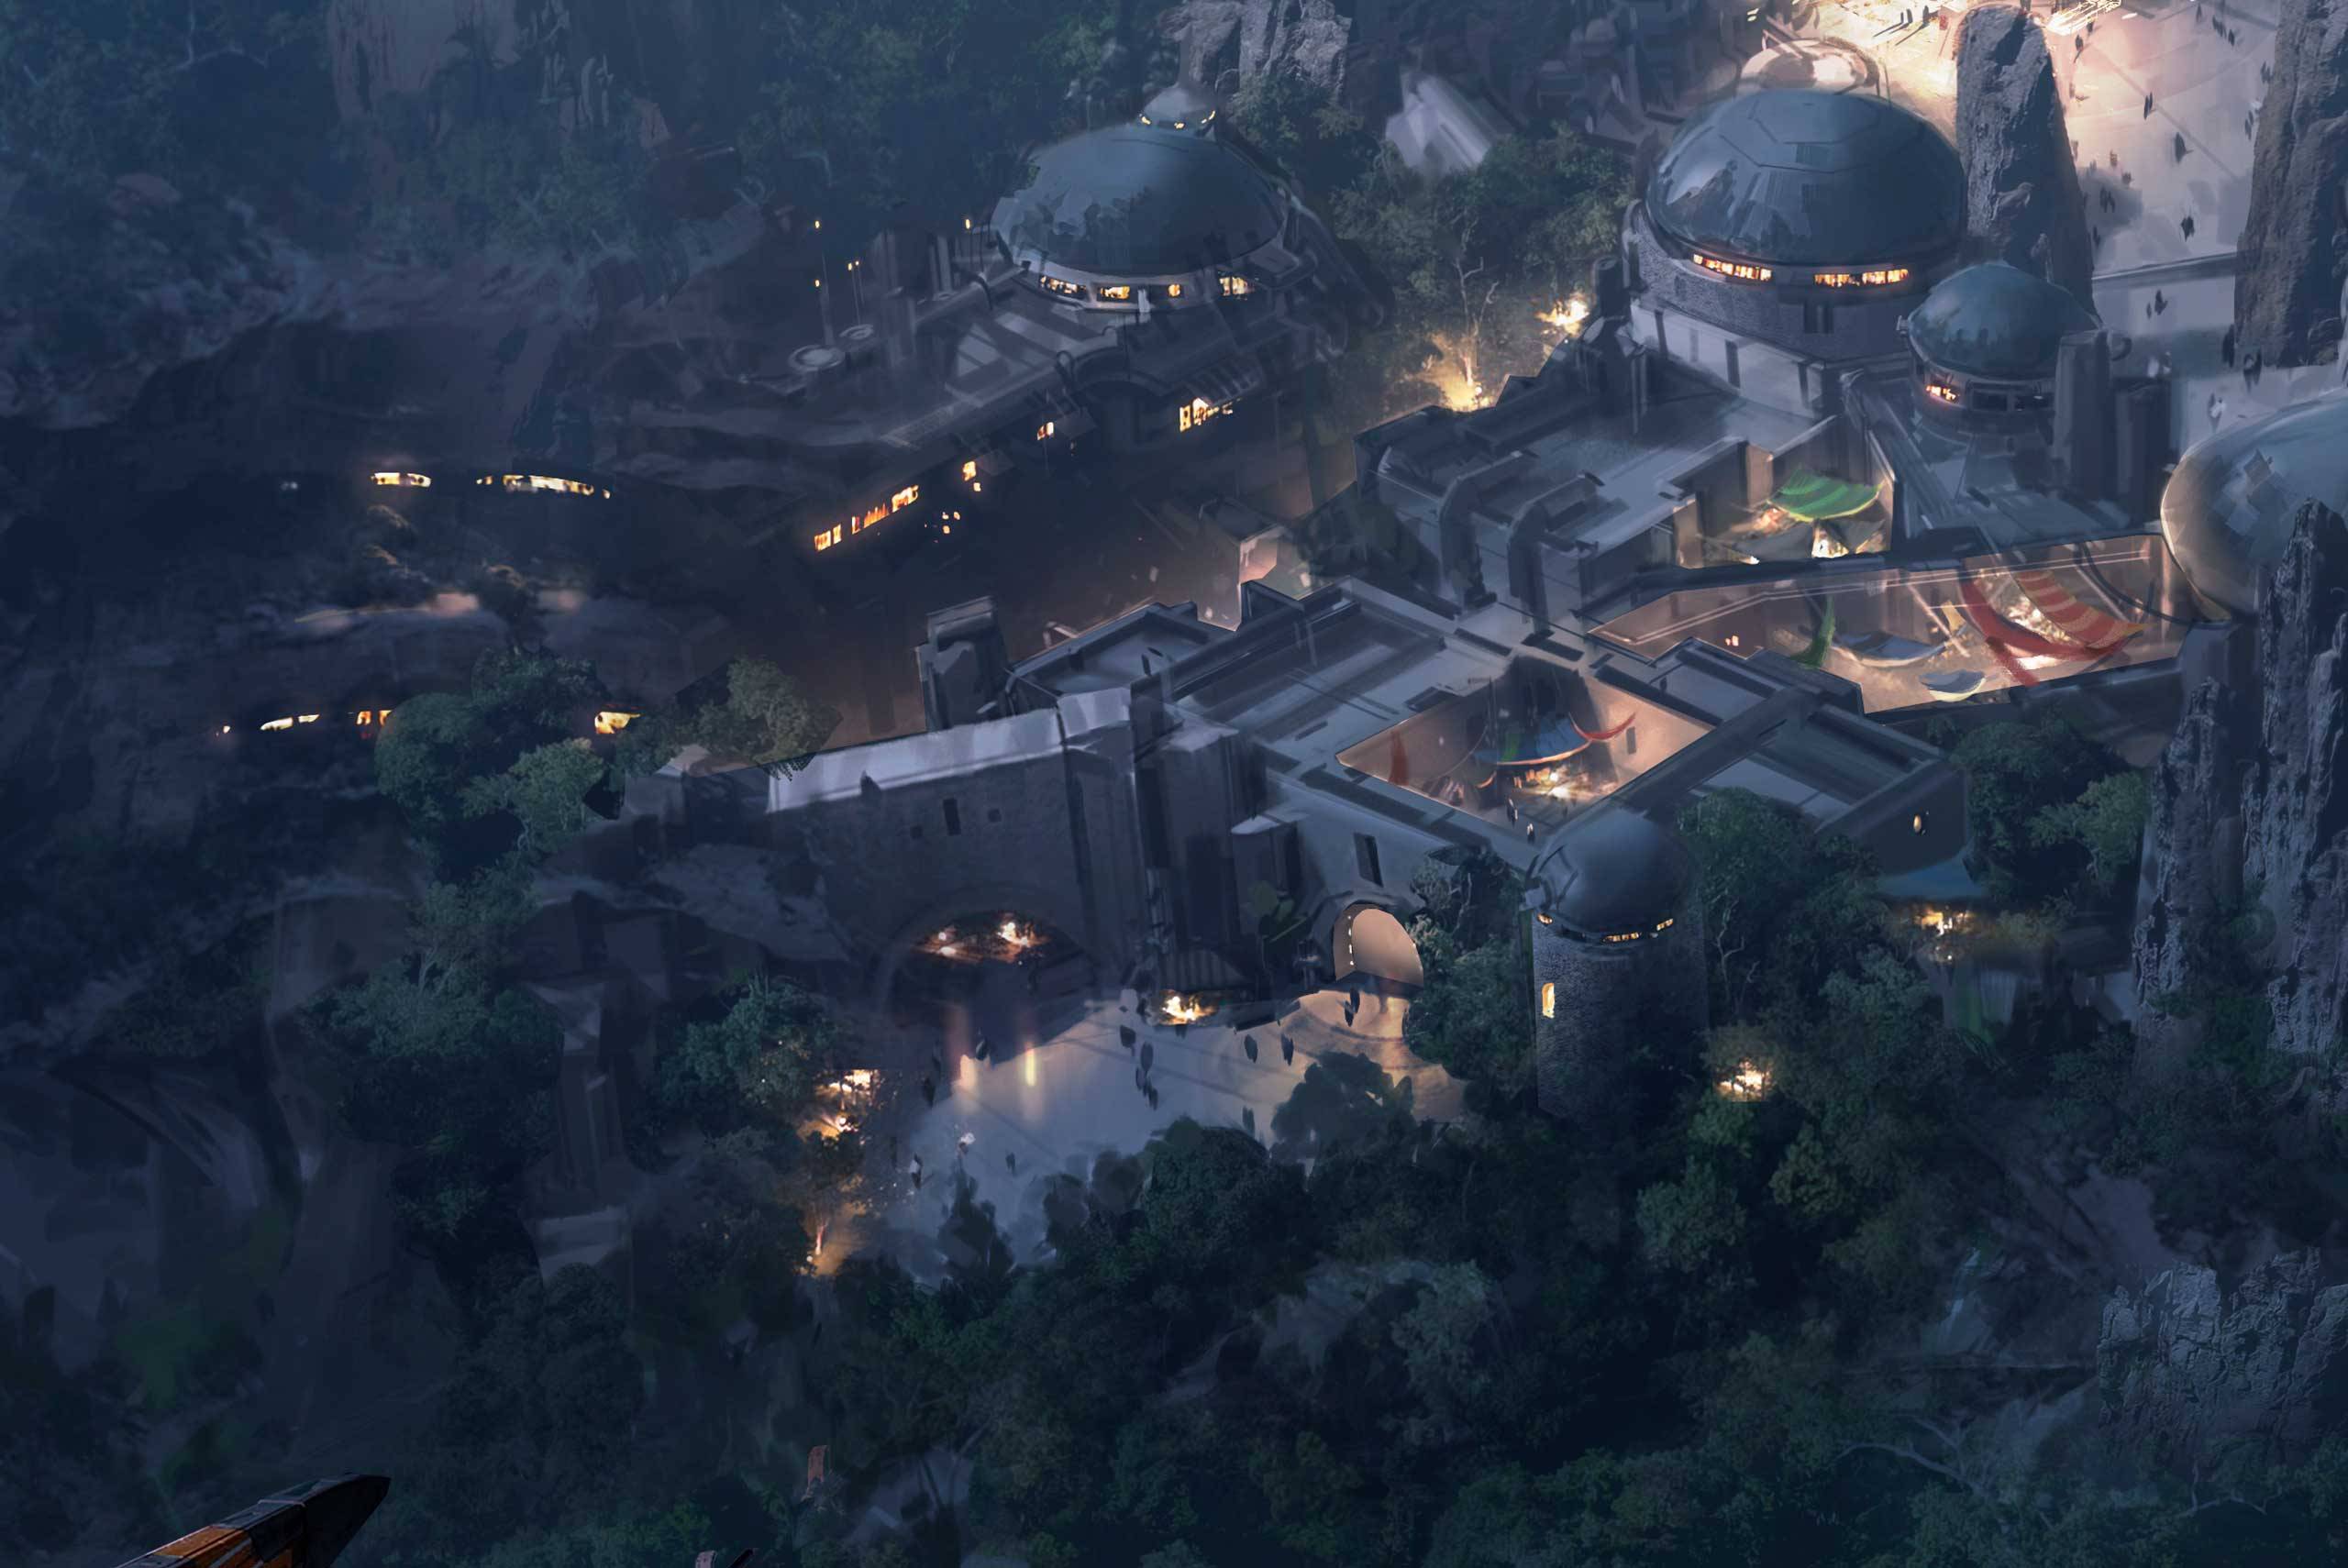 Star Wars Land at Disney's Hollywood Studios concept art